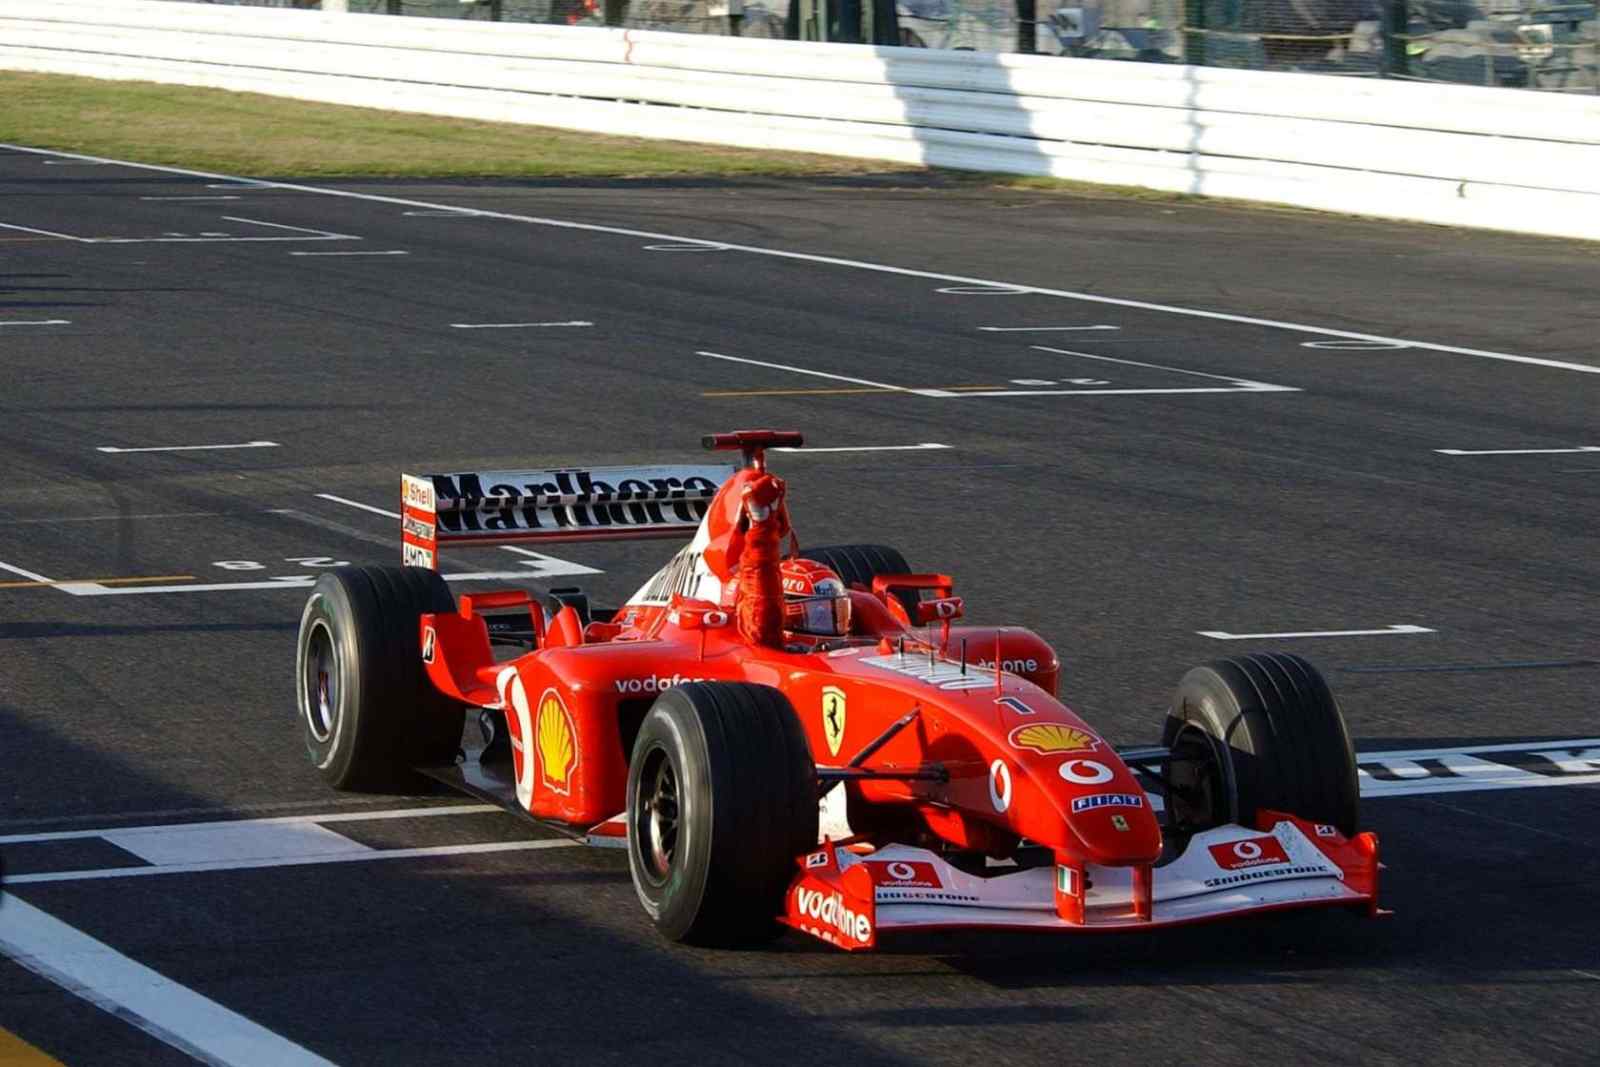 No pódio em todas as corridas de 2002, Schumacher igualou a marca de cinco títulos de Fangio